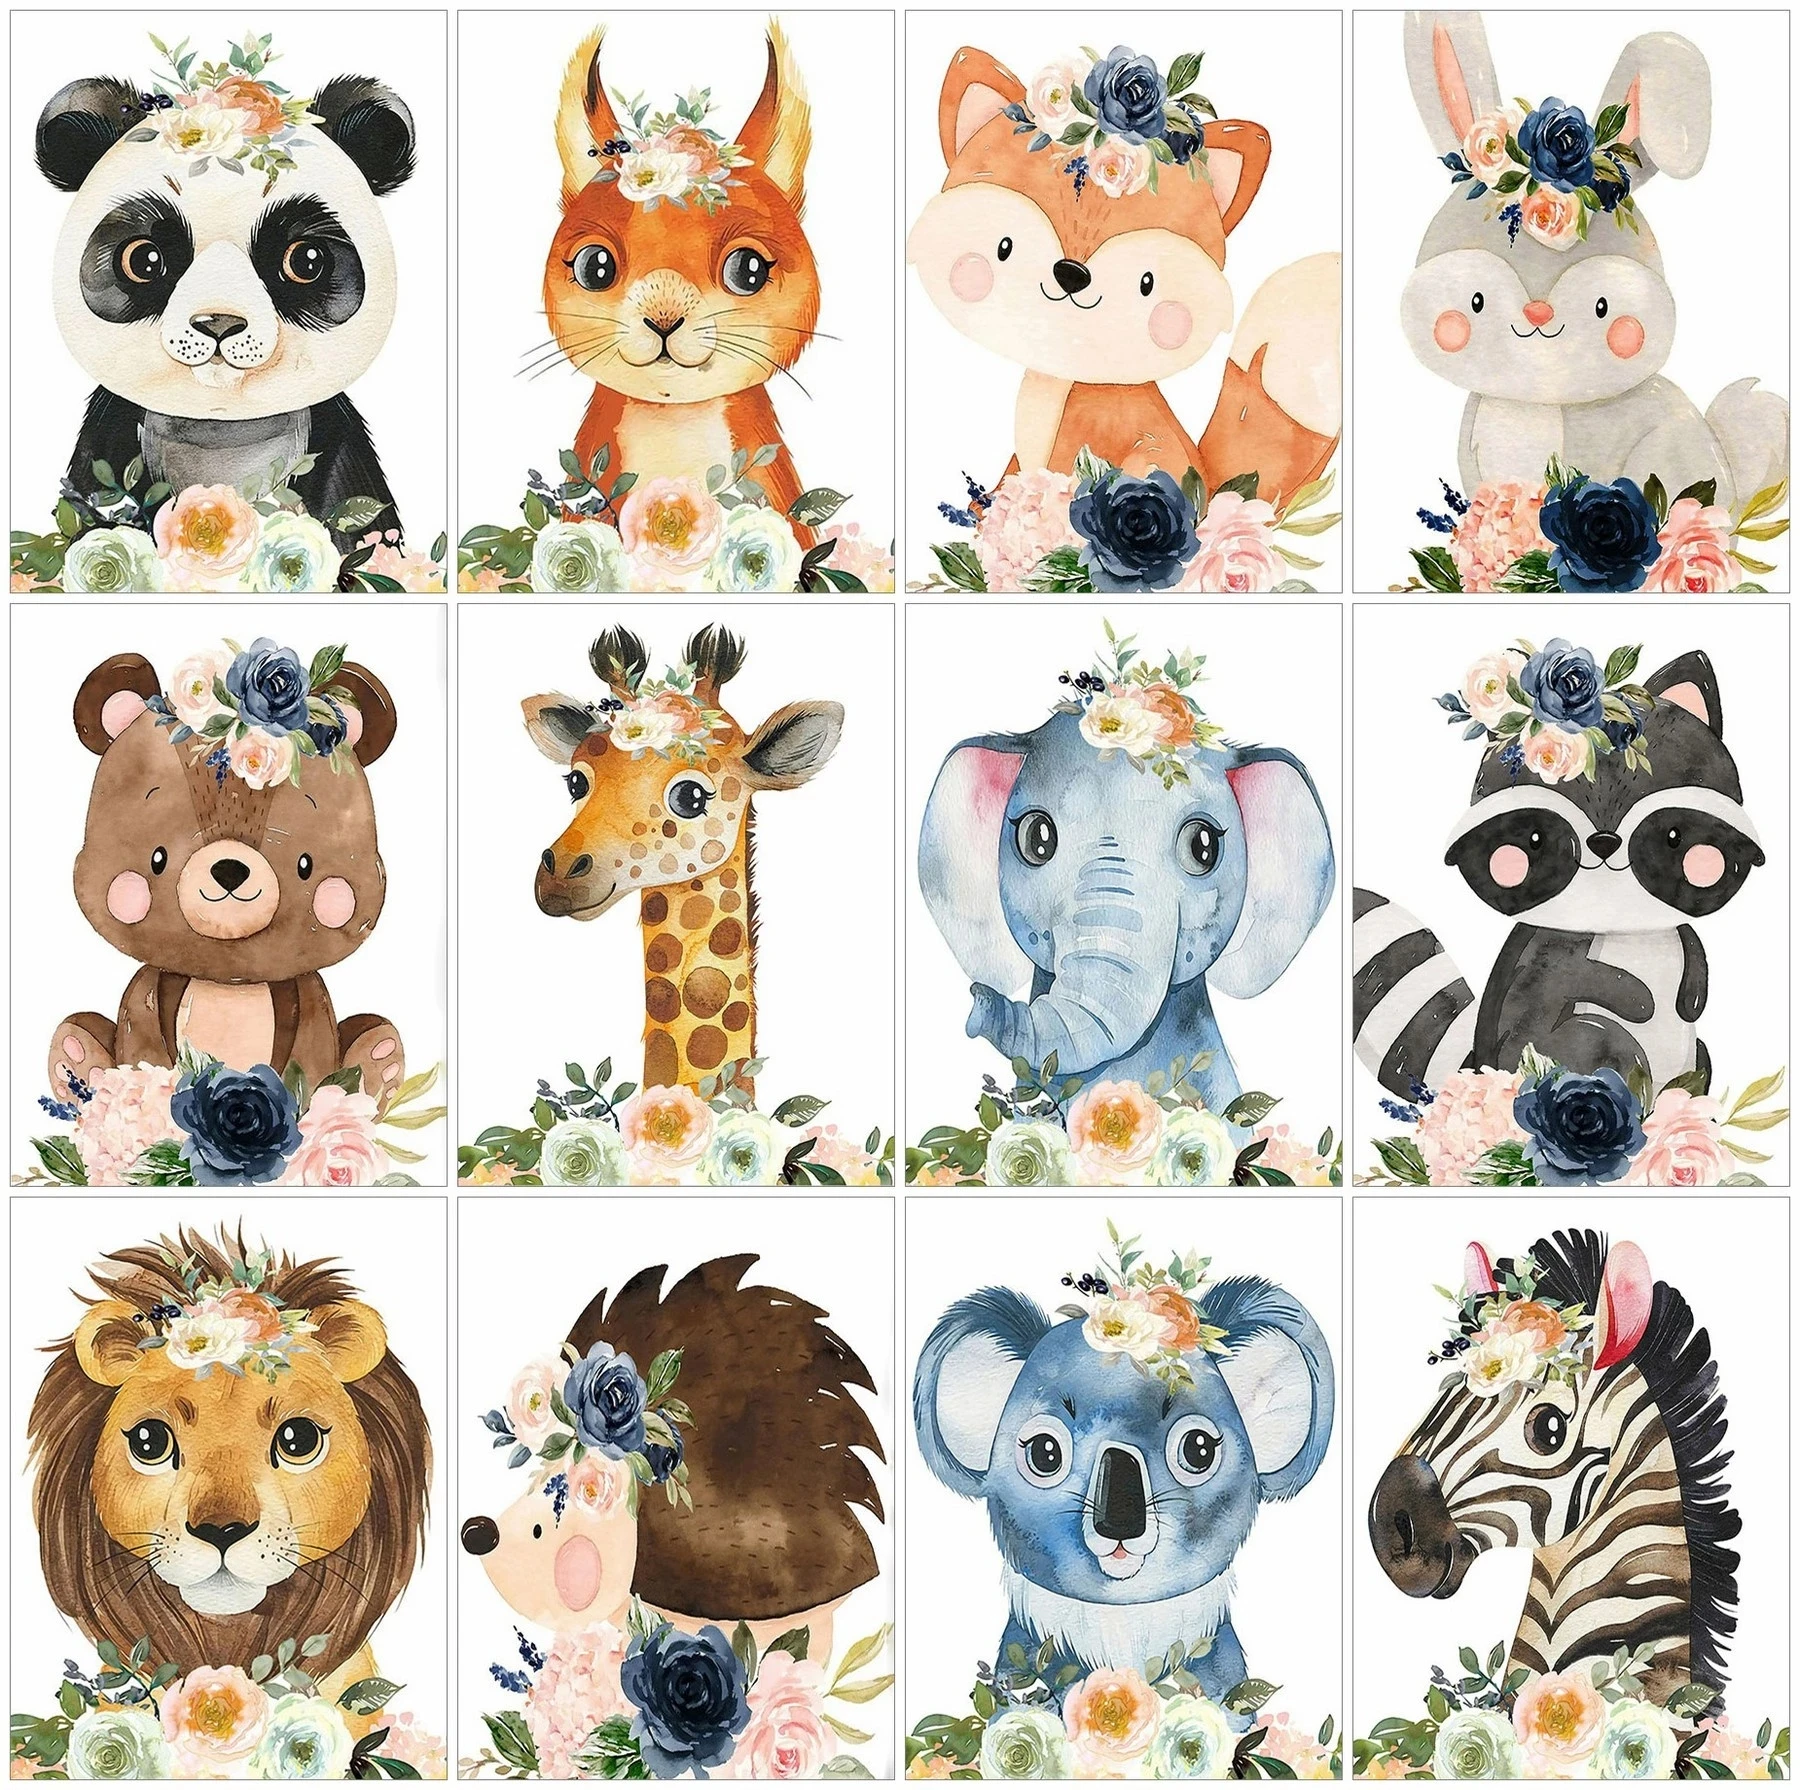 

Sontonga 5D Diamond Art Painting Kits Panda Giraffe Lion Full Diamond Mosaic Embroidery Animals Personalized Gift Home Decor